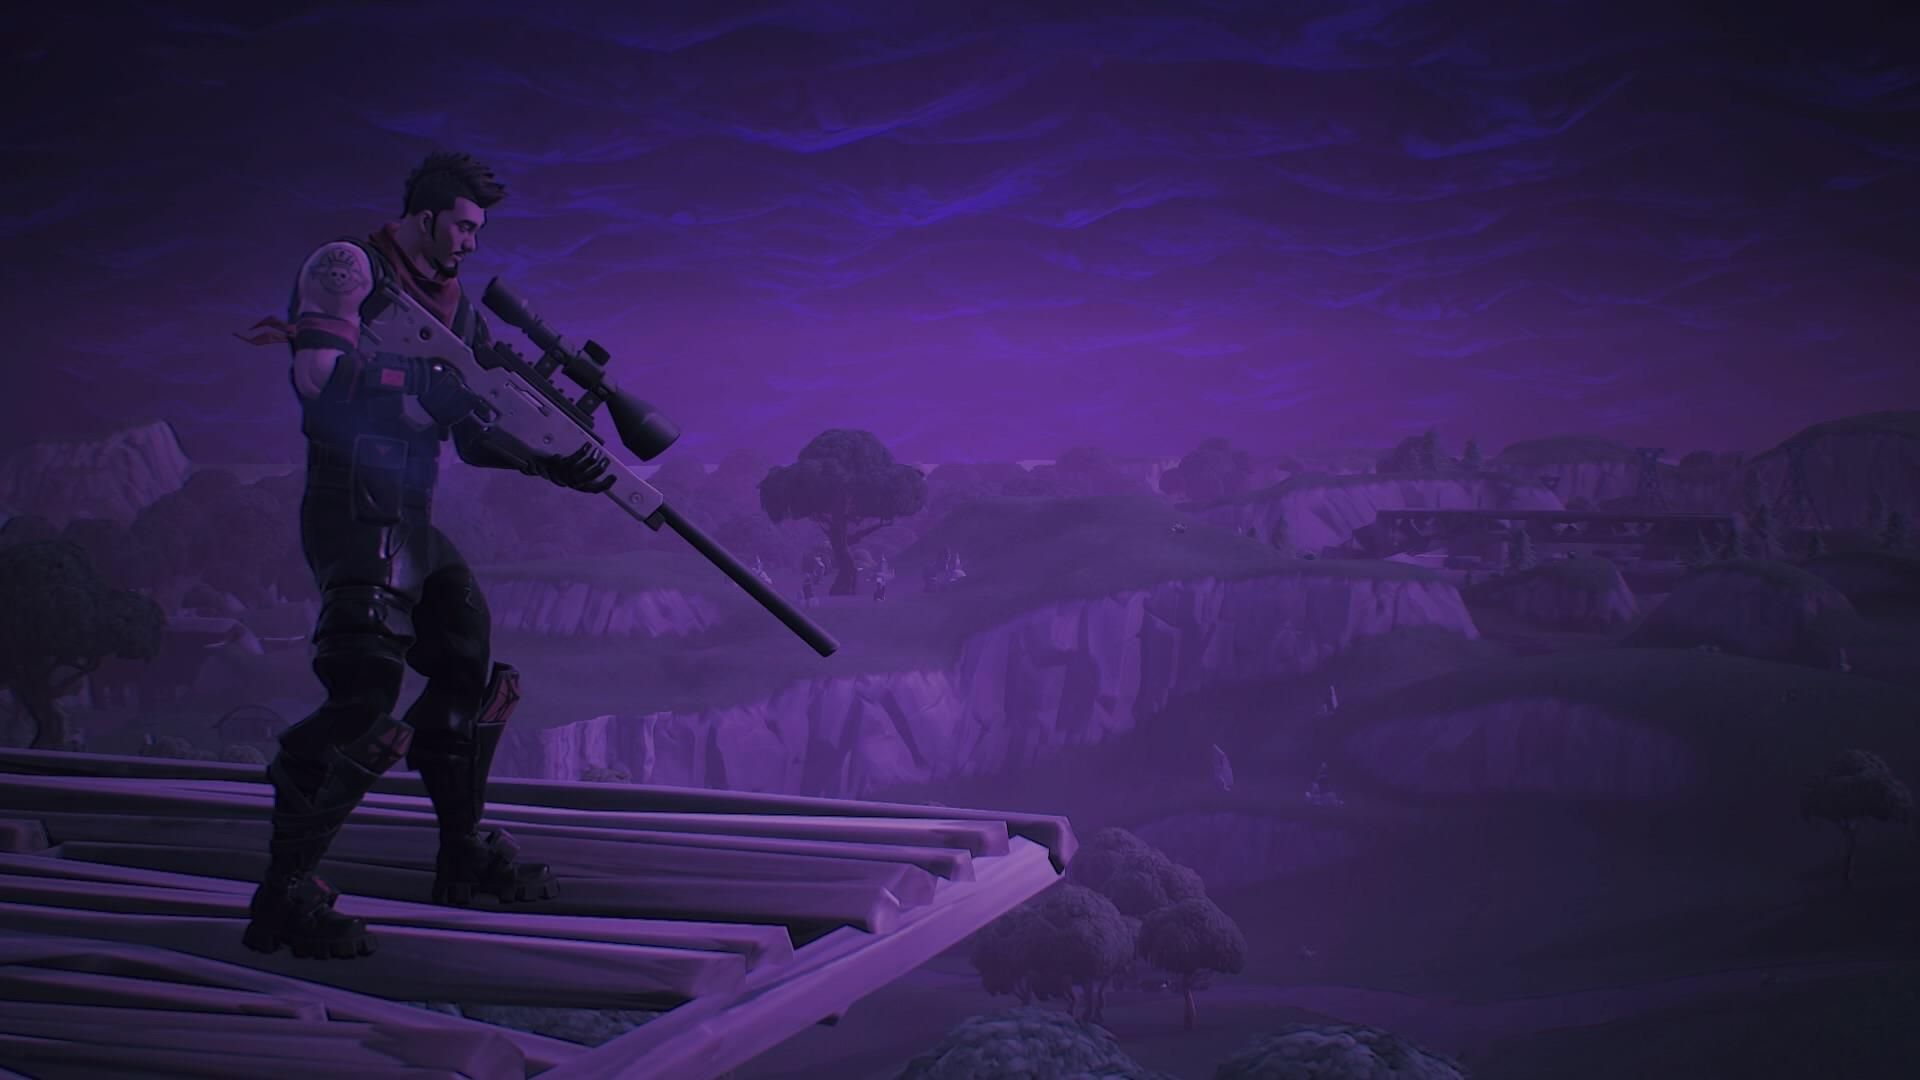 Purple Fortnite Background